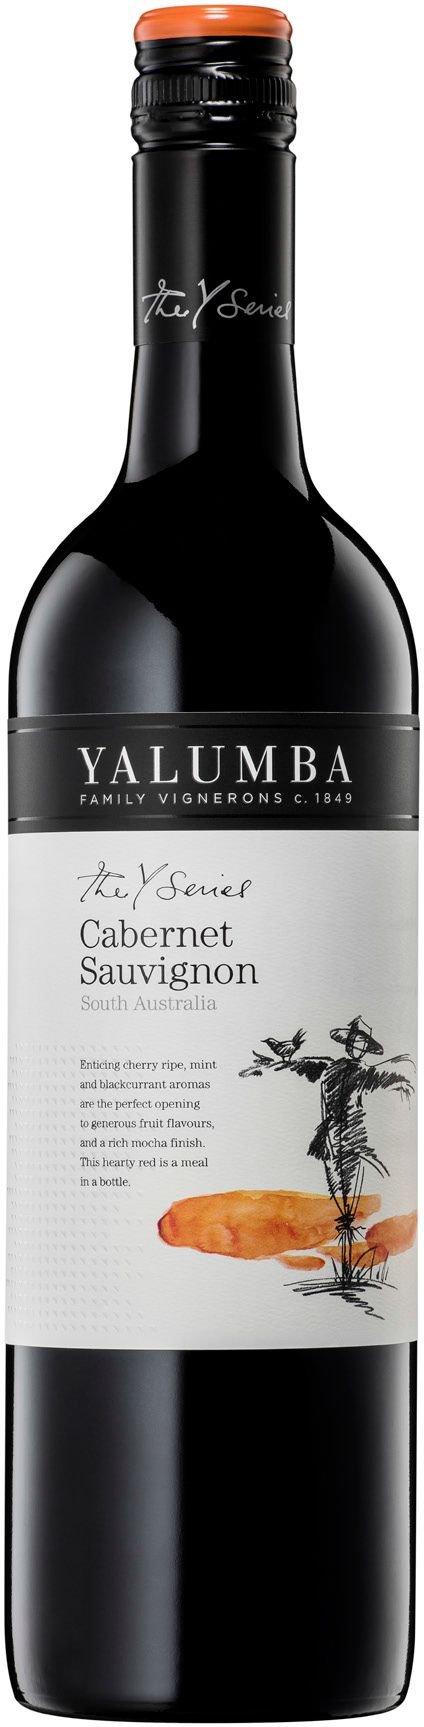 Image of Yalumba 2014, The Y Series Cabernet Sauvignon - 75 cl